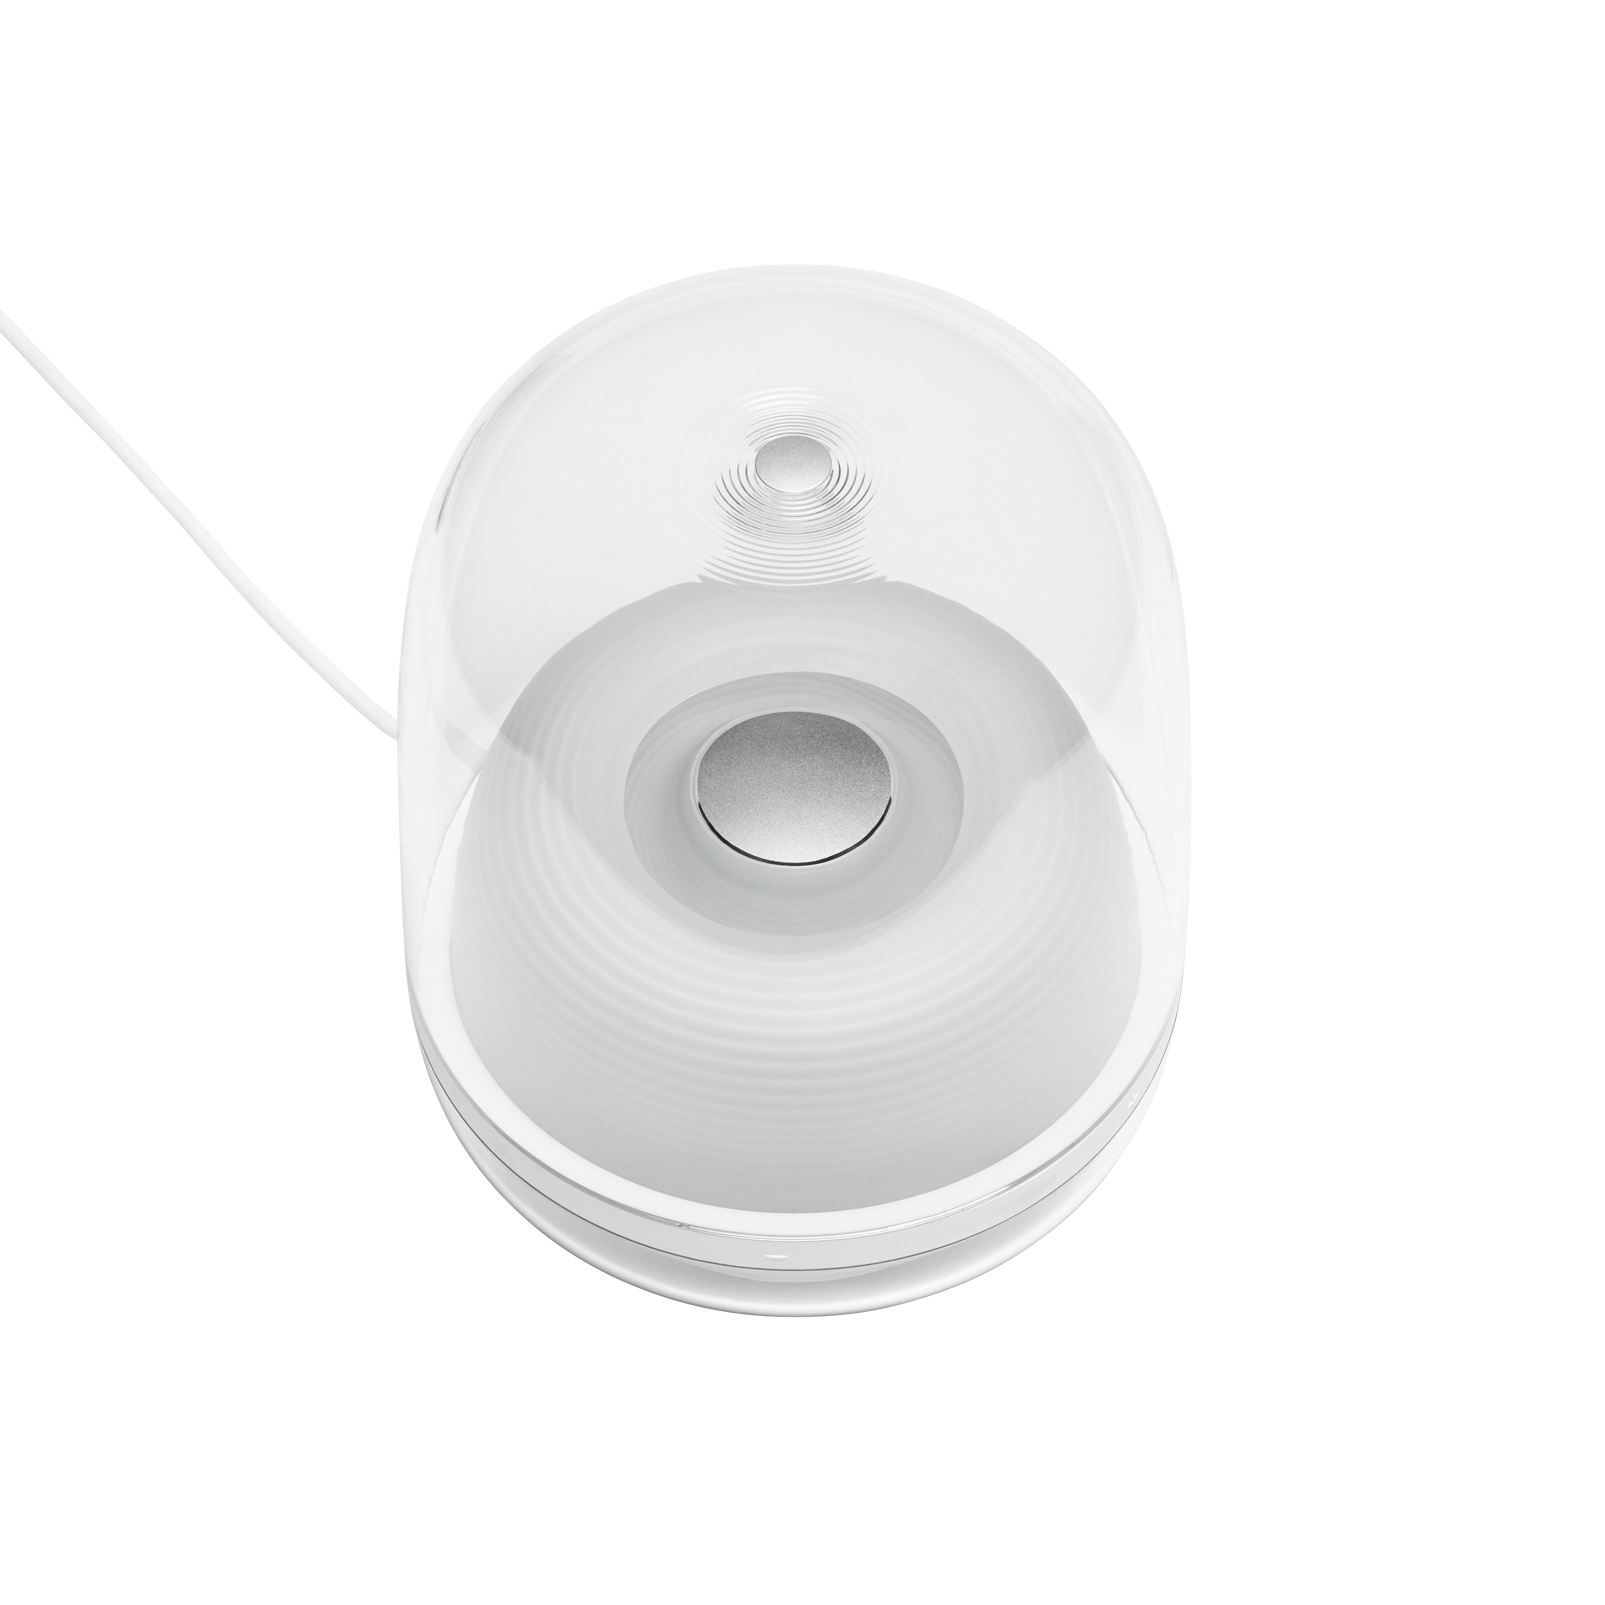 Harman Kardon SoundSticks 4 - White - Bluetooth Speaker System - Detailshot 8